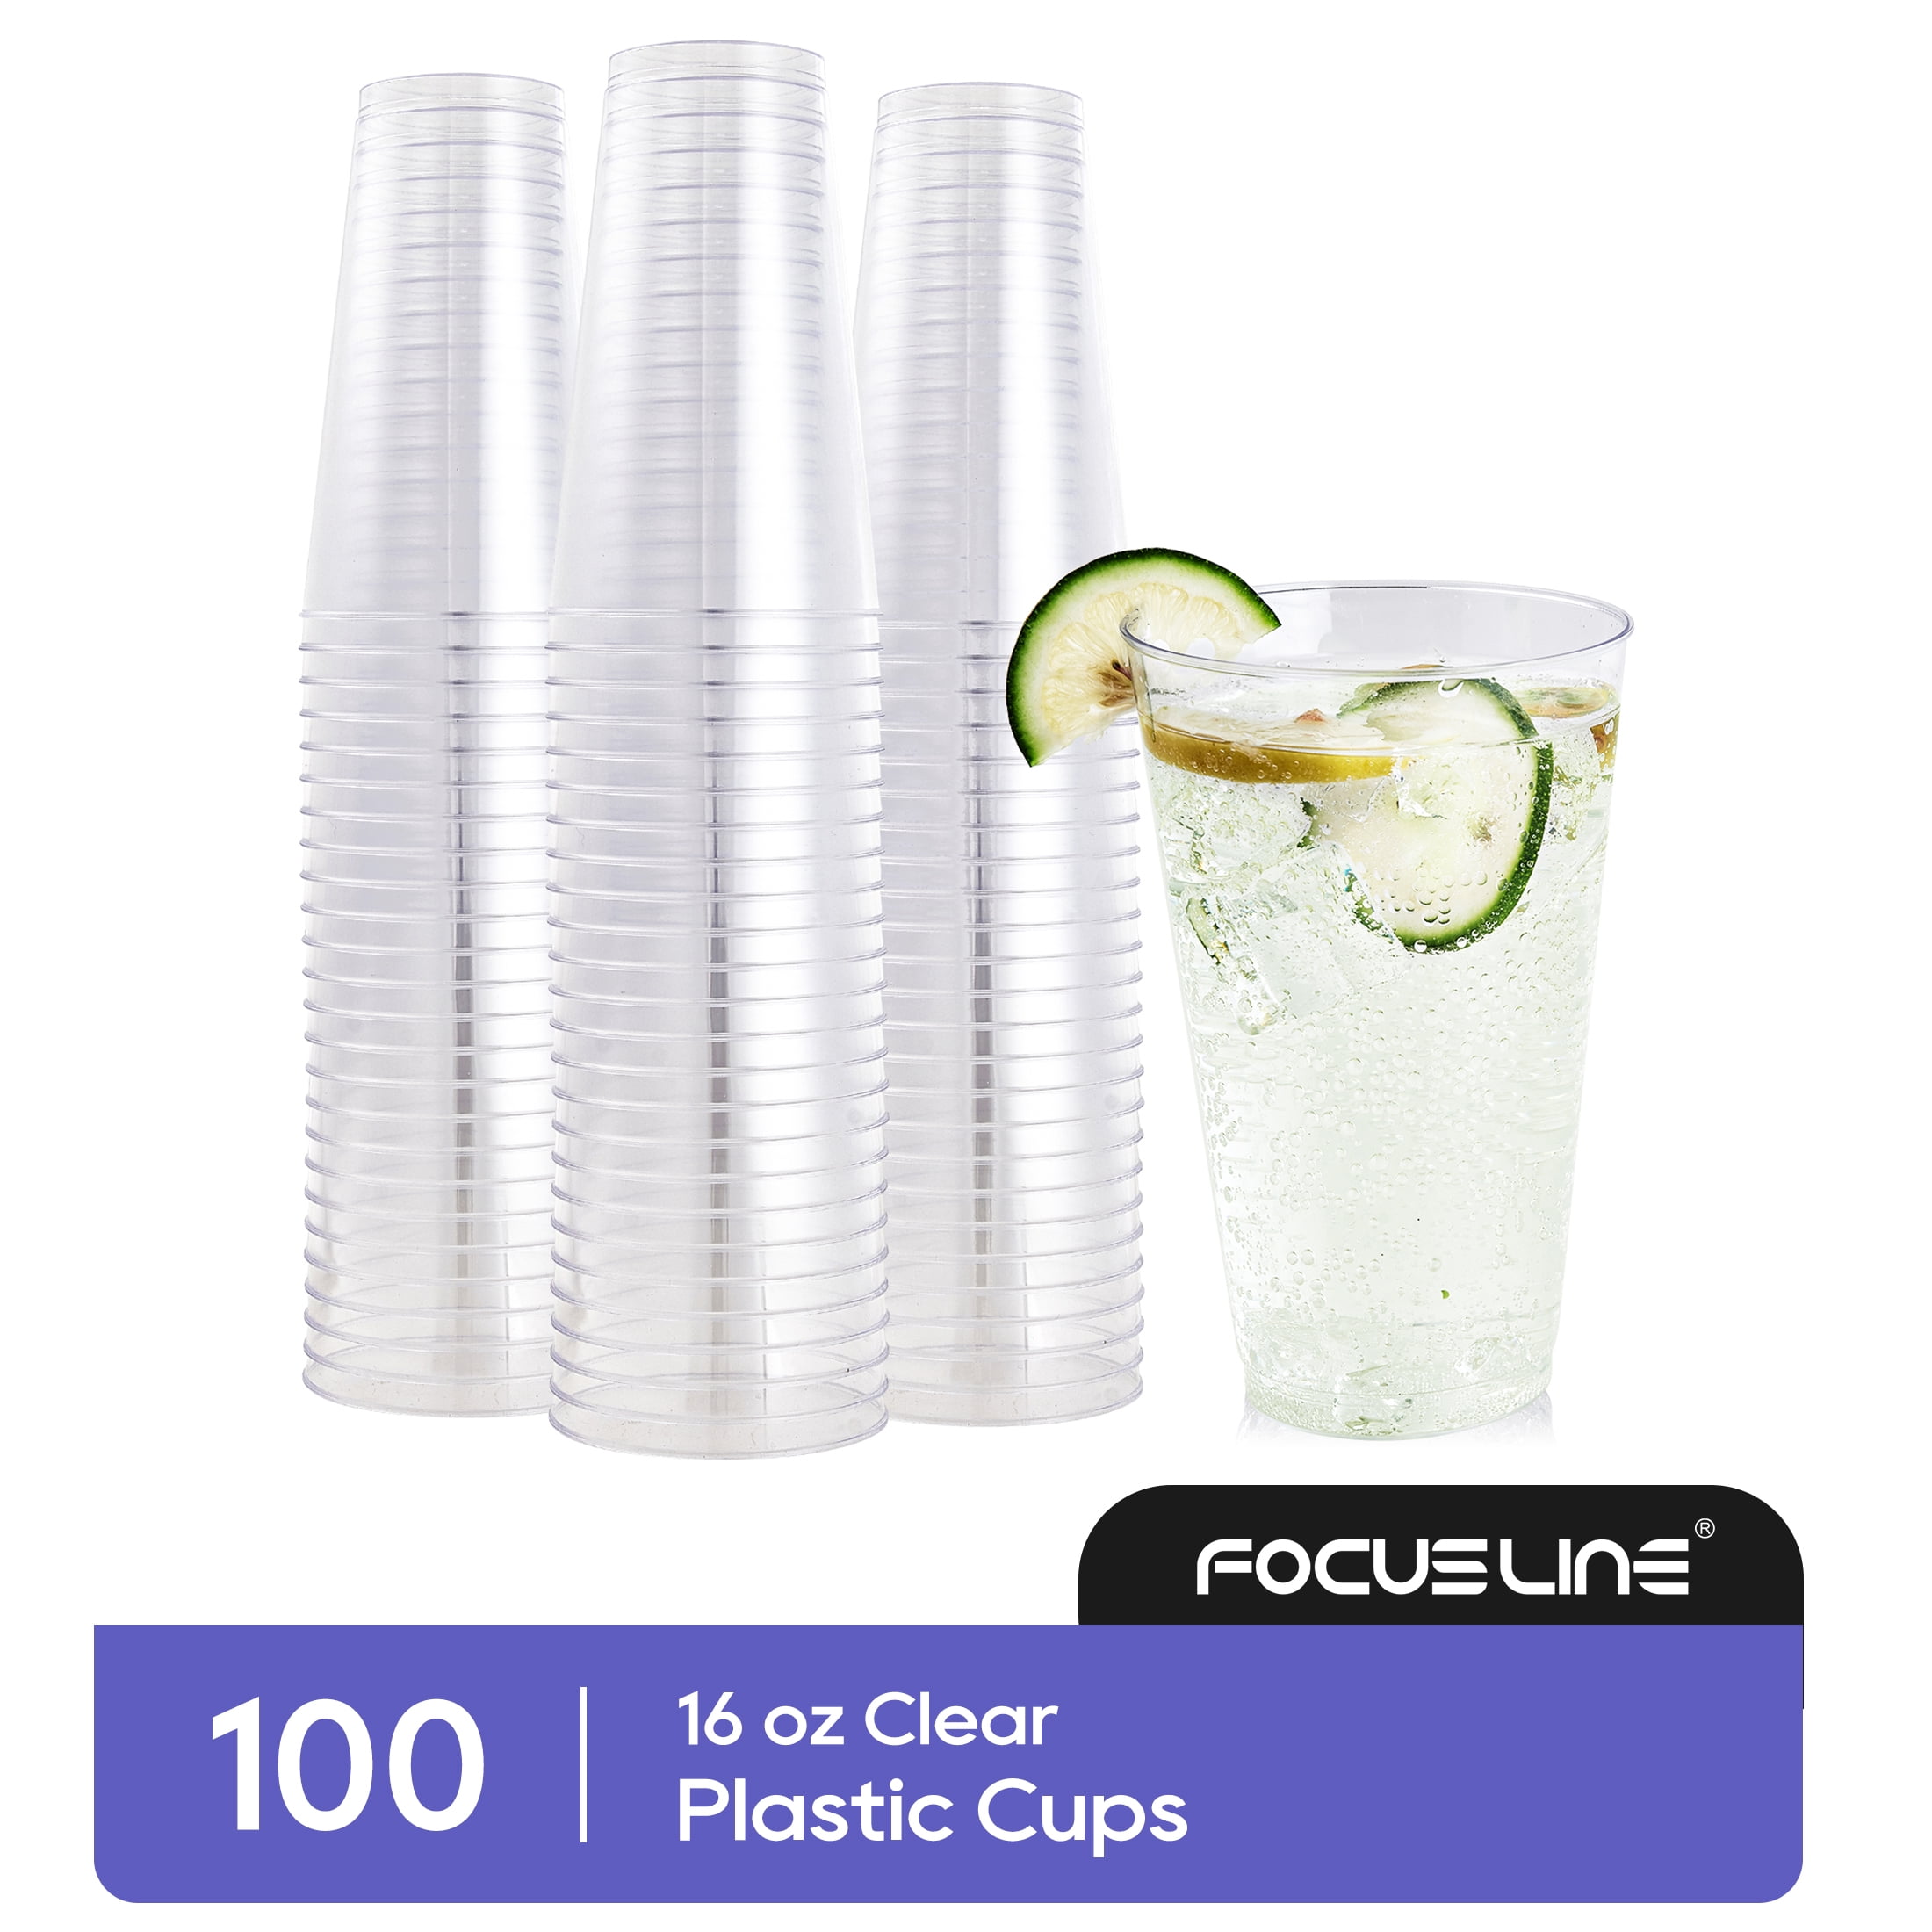 Solo Red Plastic Cups, 16 oz. 50 Pack - Parish Supply